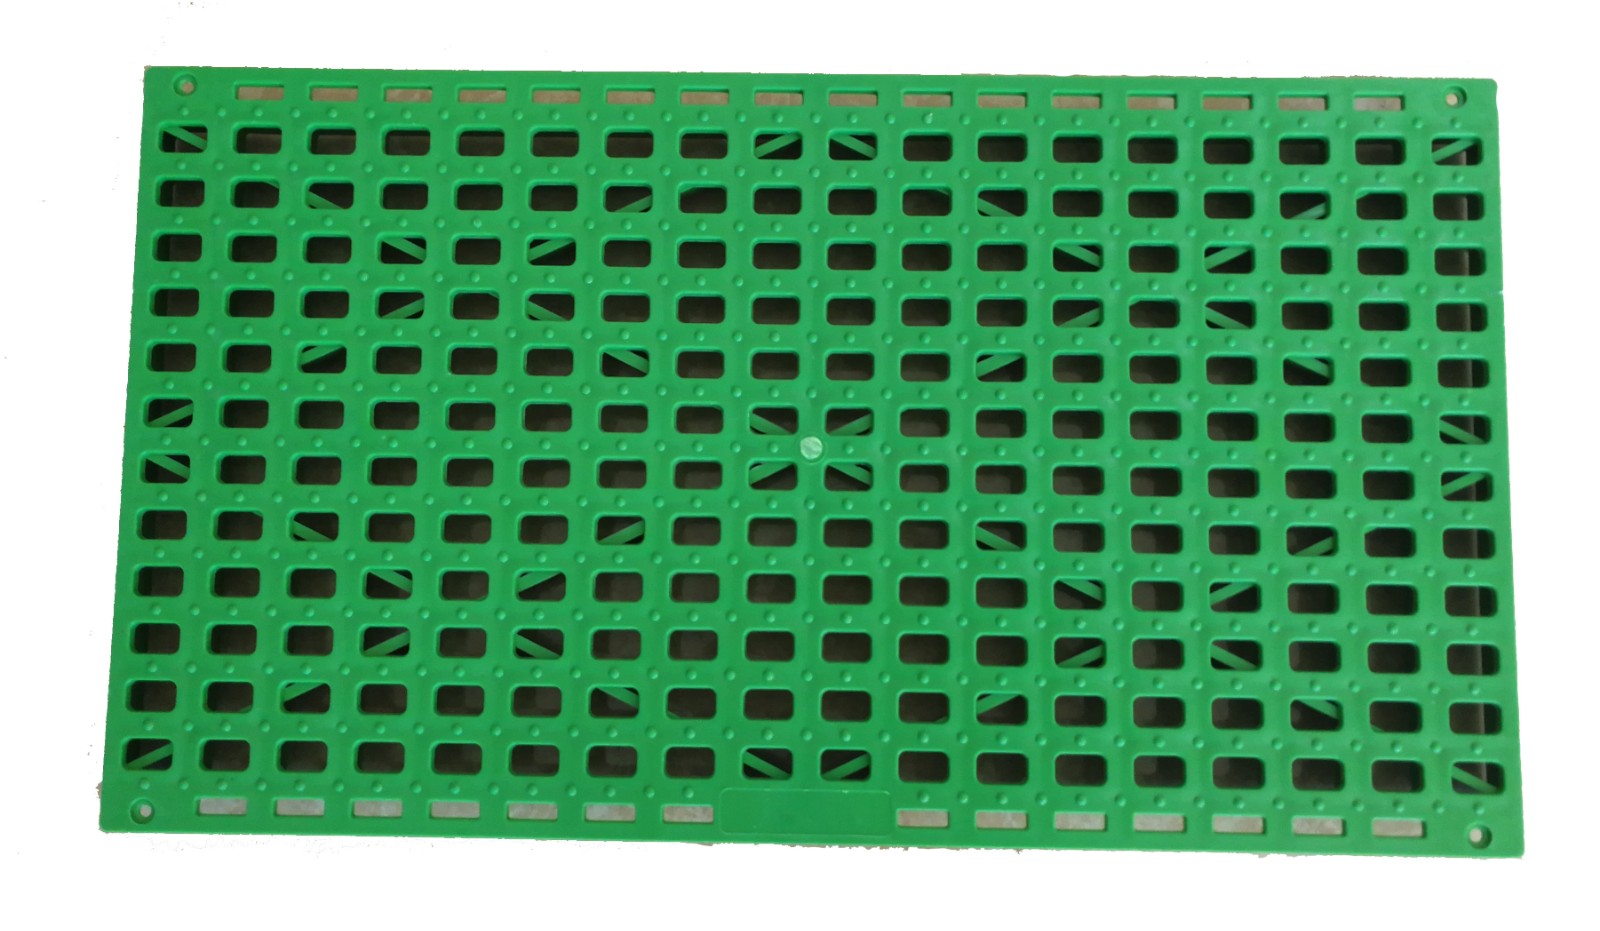 HDPE绿色网格盖板安全性能高，具有阻燃绝缘、低碳环保、强度高、耐腐蚀、防滑耐用等特点。在安装和使用的过程中，不会因为碰撞而产生电火花，比较适合在易燃易爆的环境中使用，耐高温性能良好。此外，HDPE绿色网格盖板还具有防滑层面，可以更好的防止滑倒，减少事故的发生。